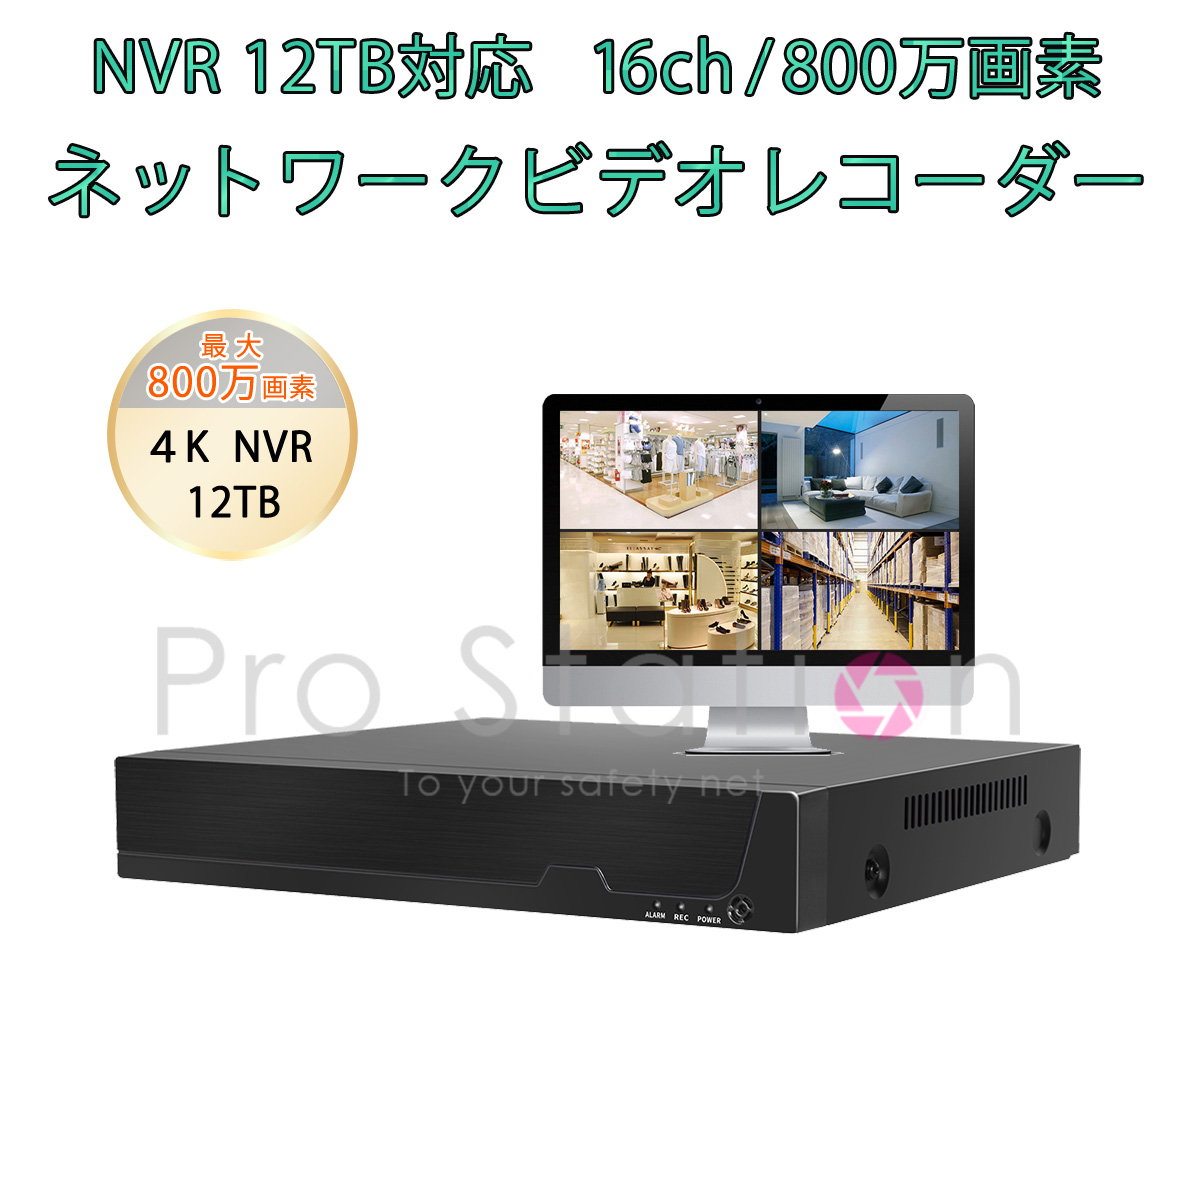 NVR ネットワークビデオレコーダー 16ch IP ONVIF形式 スマホ対応 遠隔監視 HDD最大12TB対応 FHD 800万画素カメラ対応 動体検知 同時出力 録音対応 H.265 IPカメラレコーダー監視システム PSE認証 6ヶ月保証